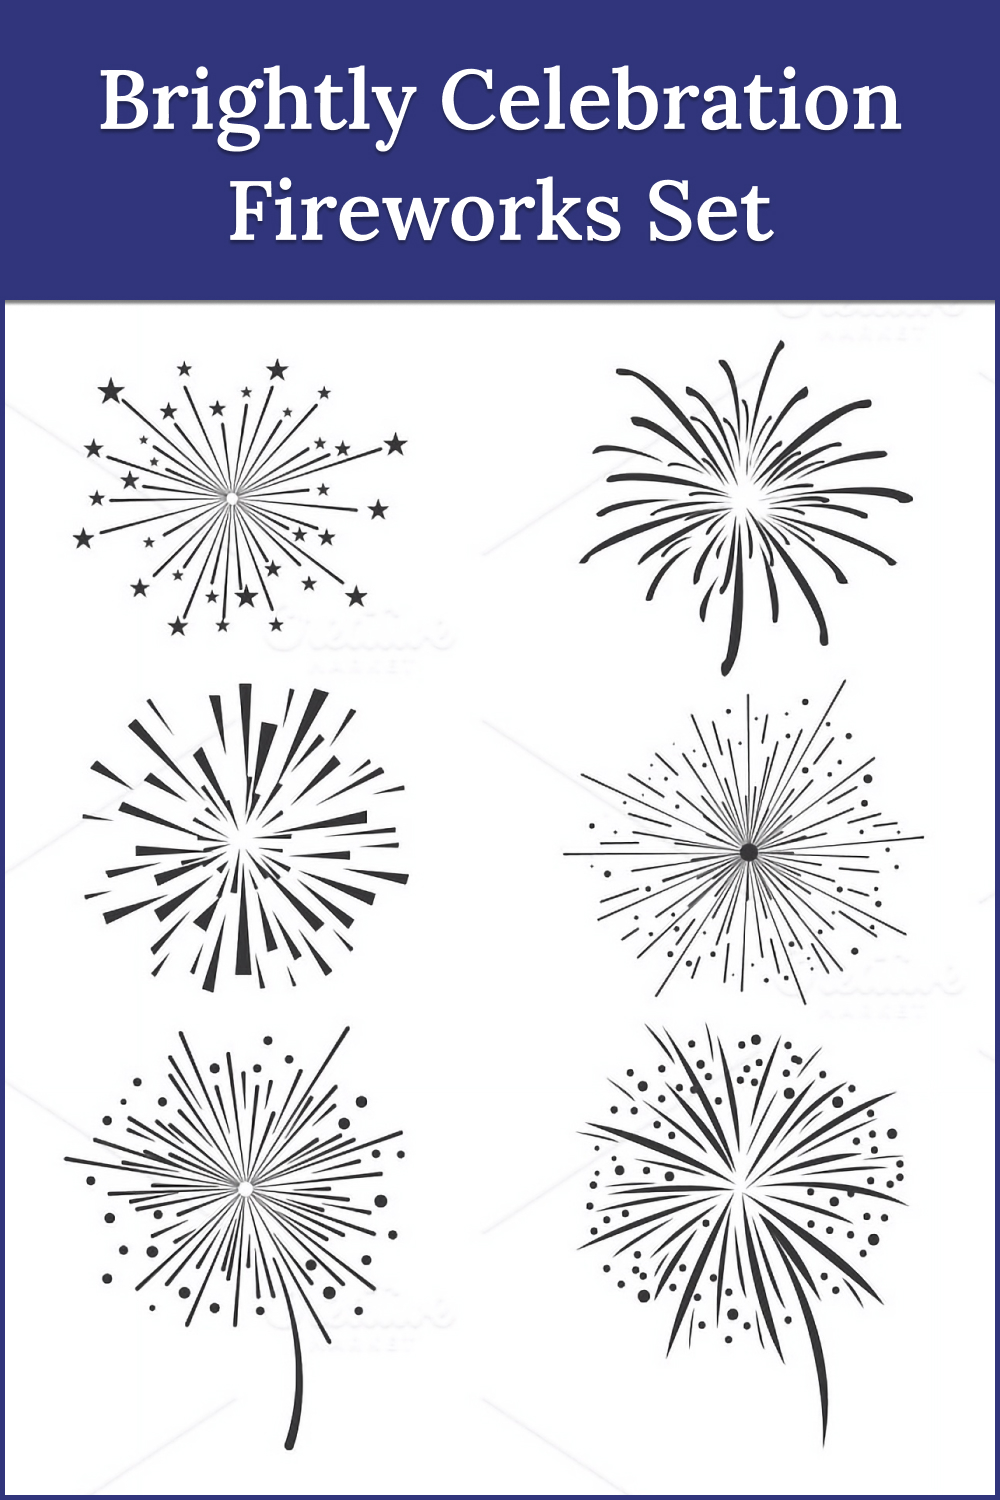 Brightly Celebration Fireworks Set - Pinterest.